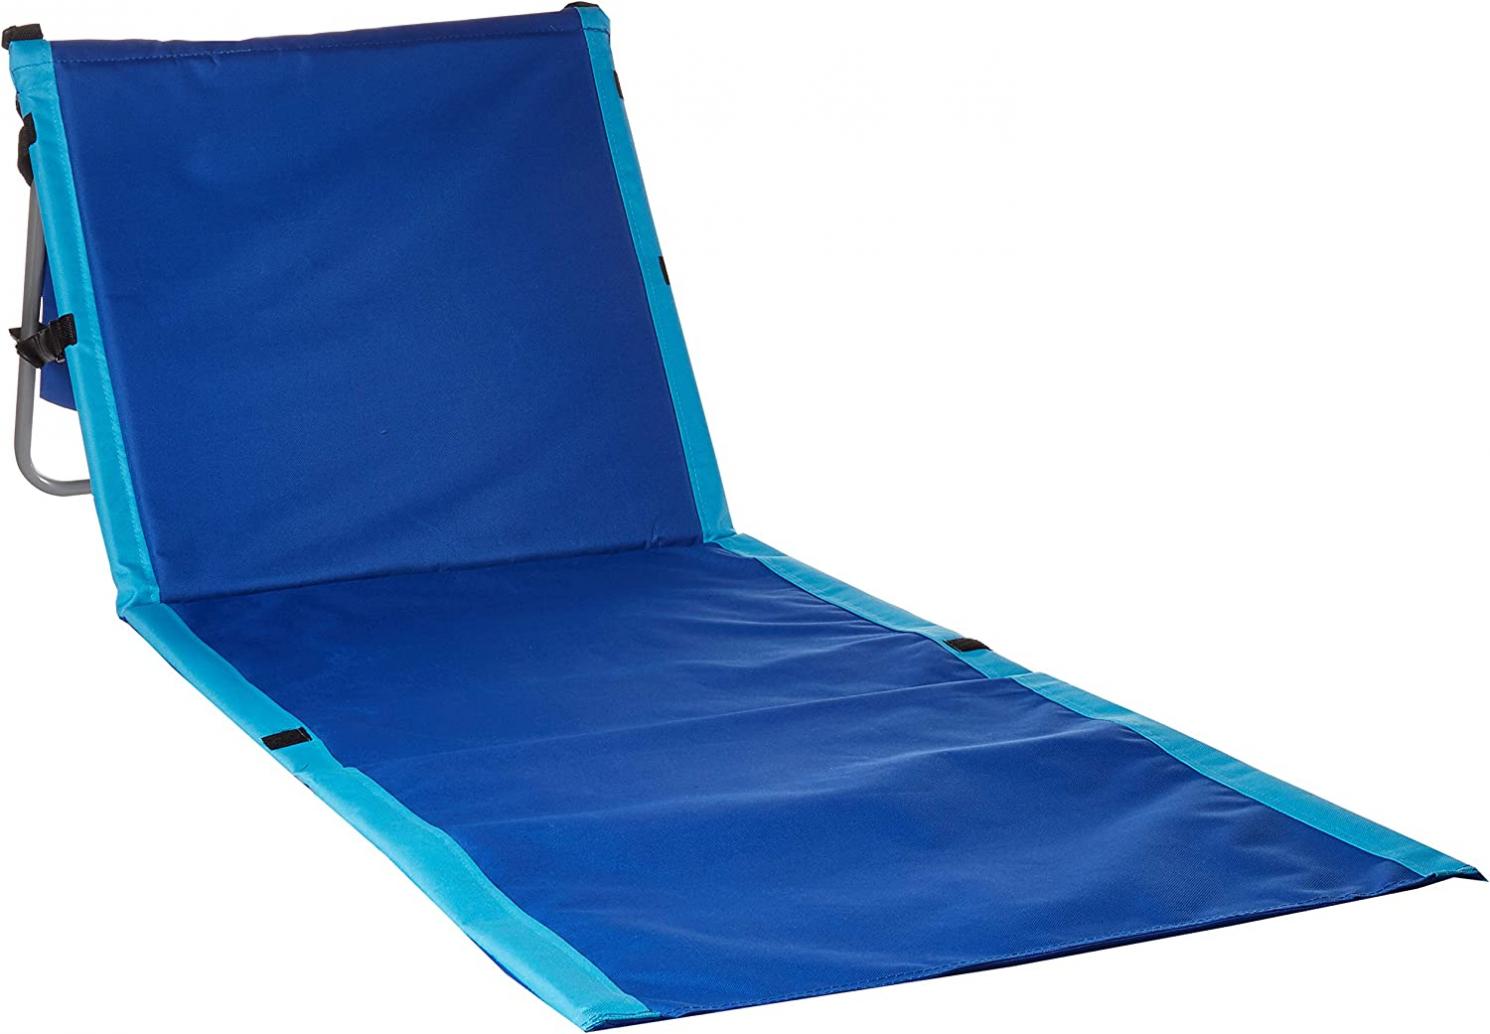 Trademark Innovations Portable Folding Beach Chair Lounge Mat, Blue